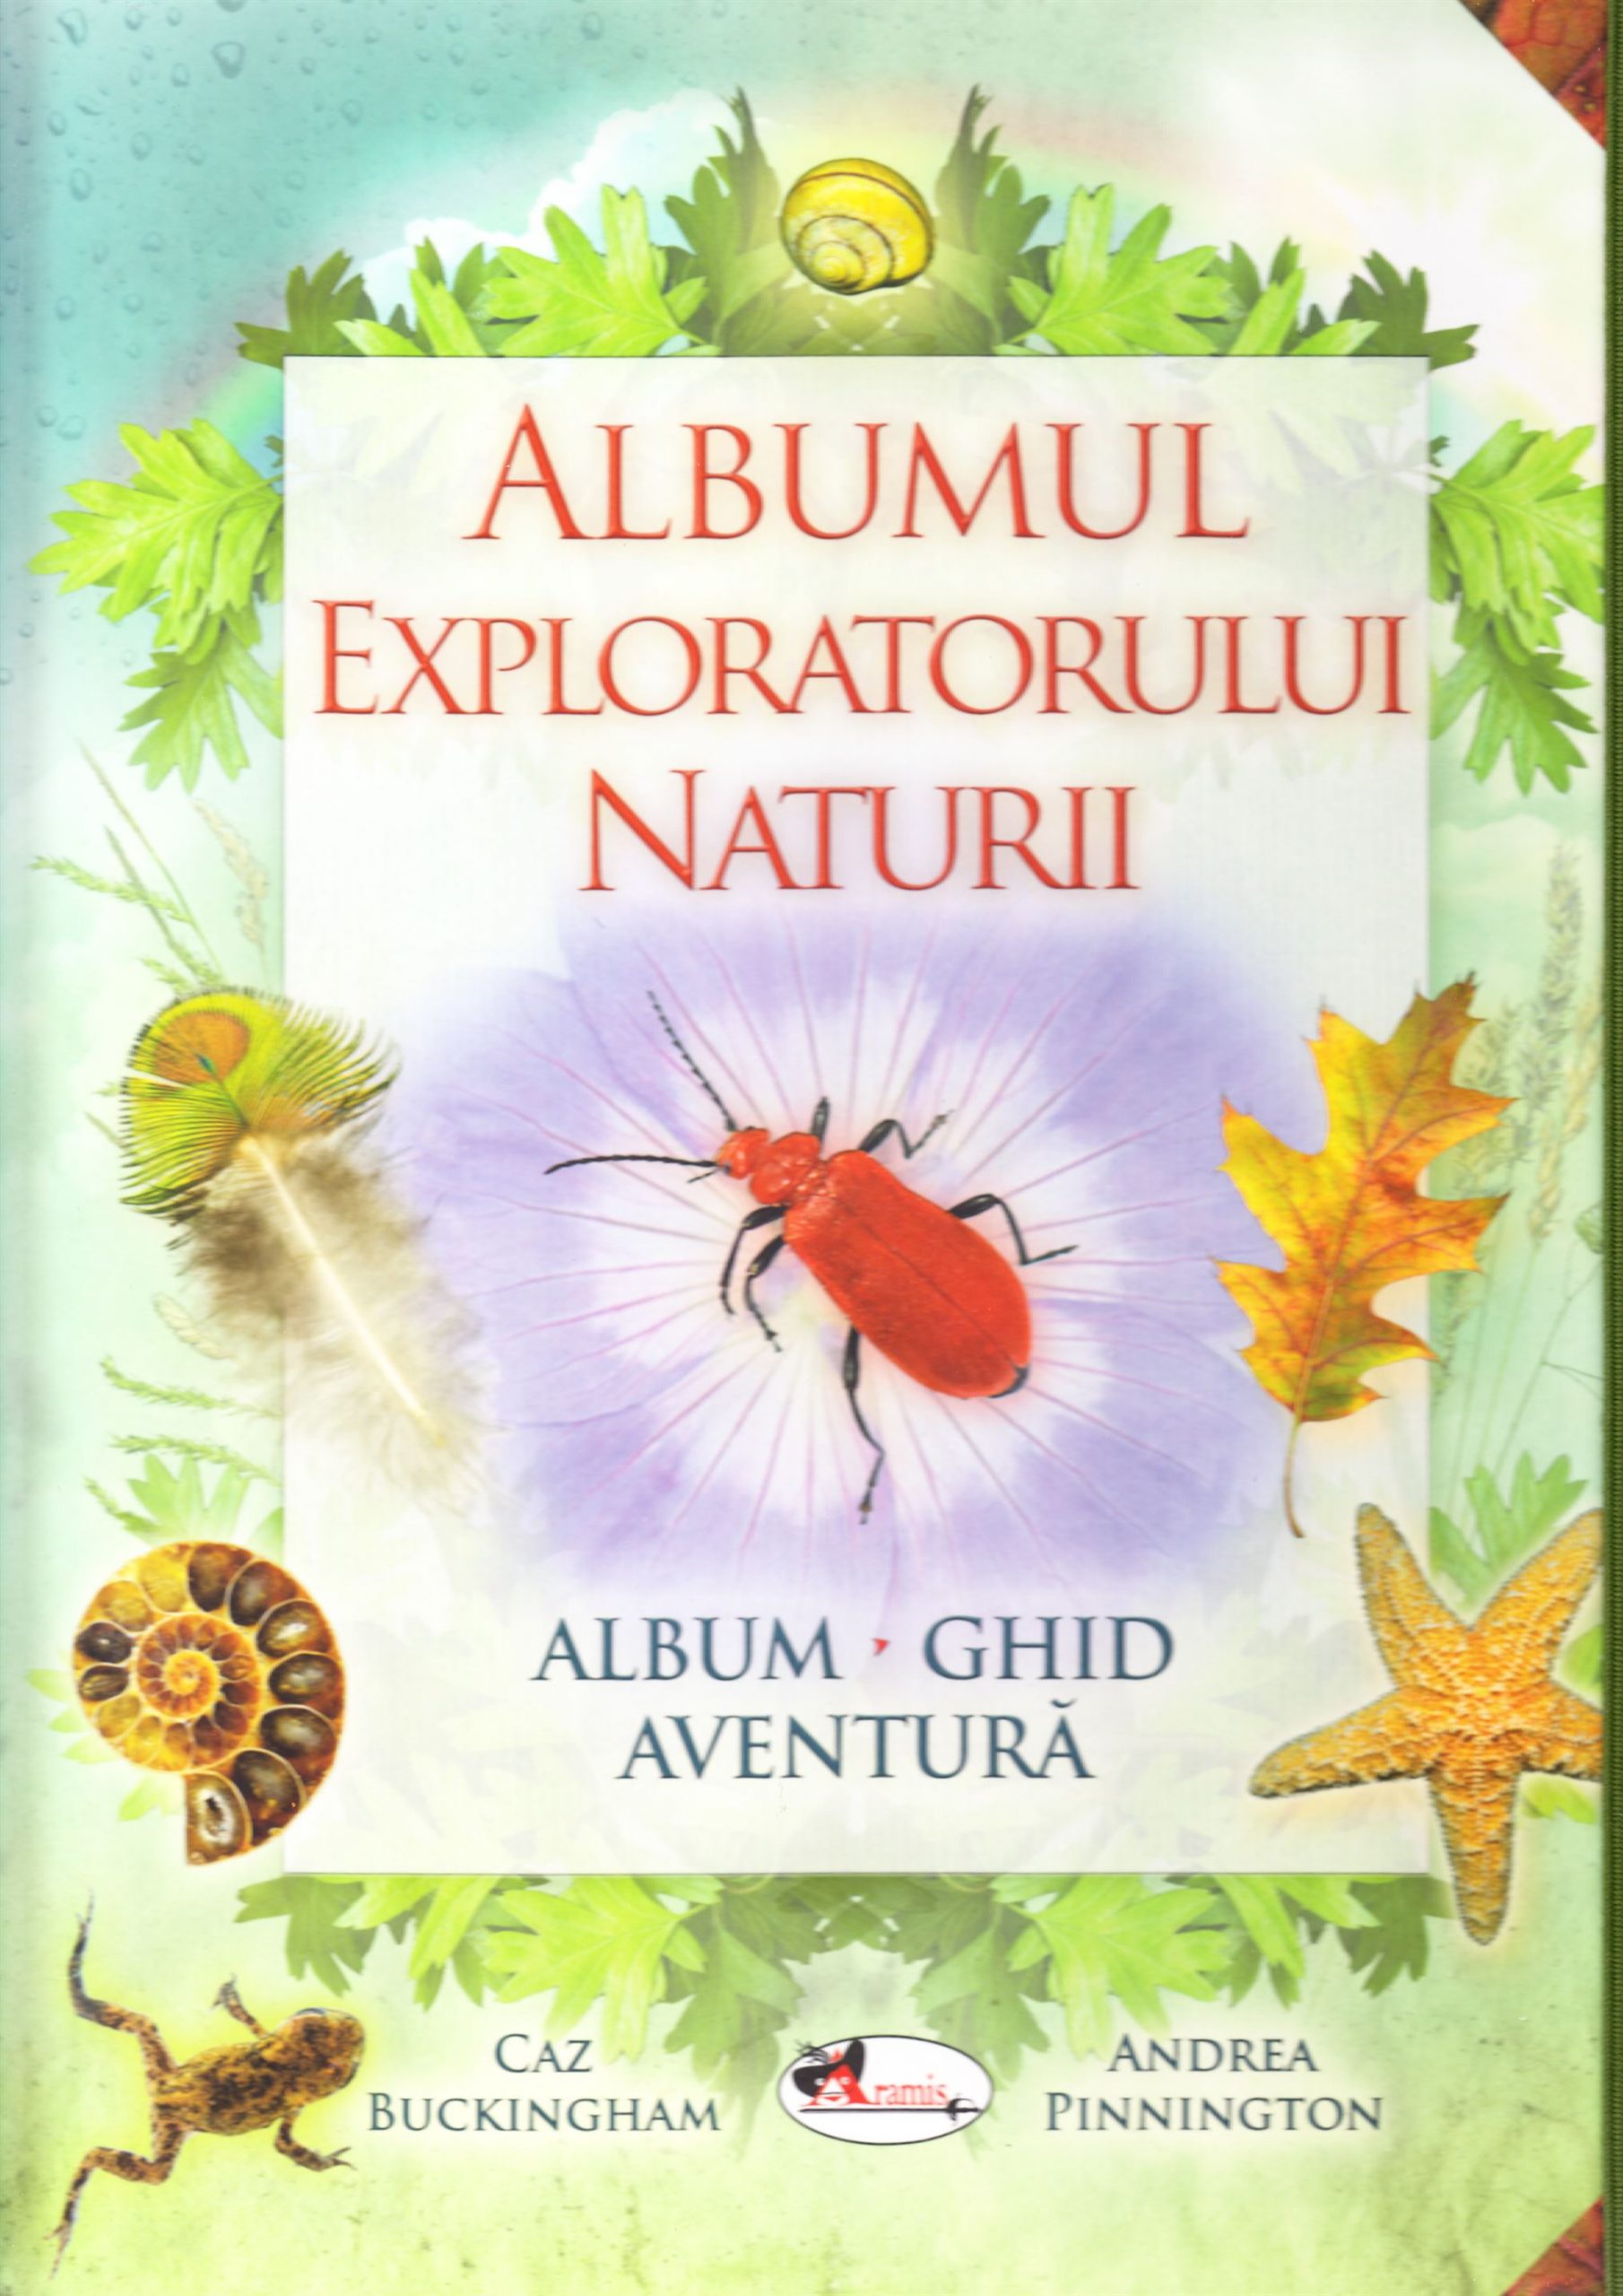 Albumul exploratorului naturii | Caz Buckingham, Andrea Pinnington Aramis poza bestsellers.ro